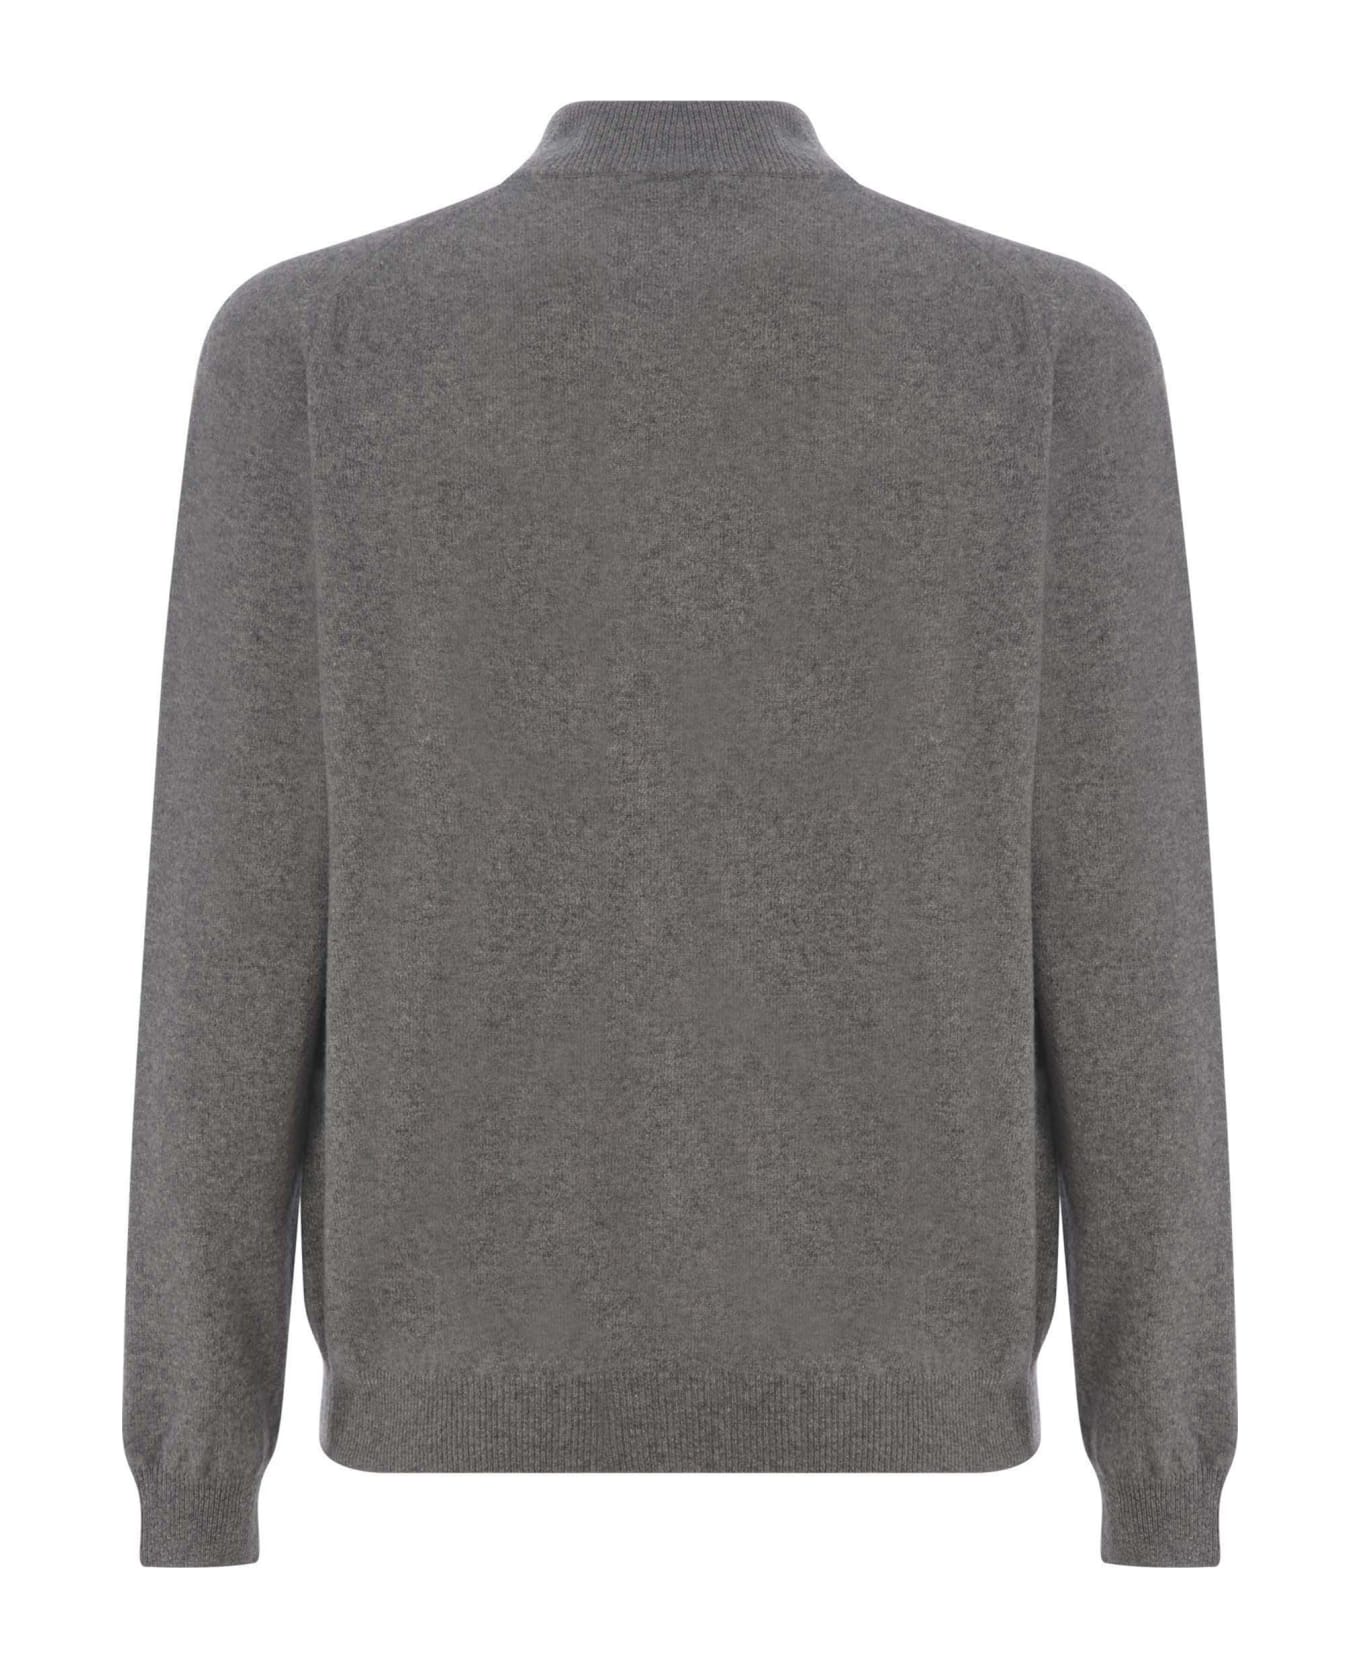 Jeordie's Sweater Jeodie's Made Of Extra Fine Wool - Grigio